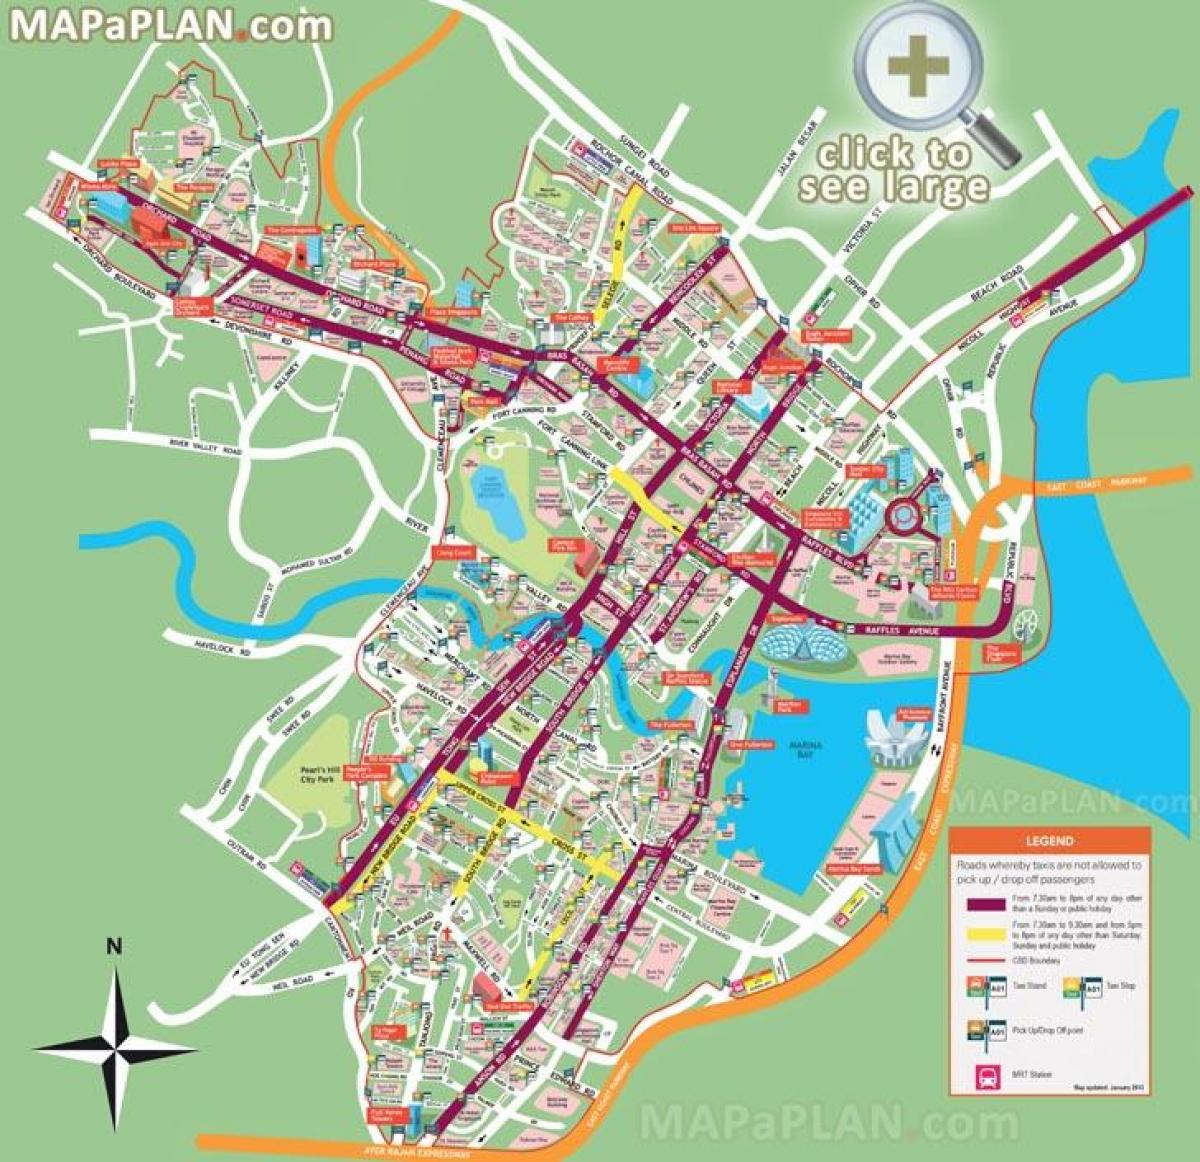 Singapore na tourist spot sa mapa